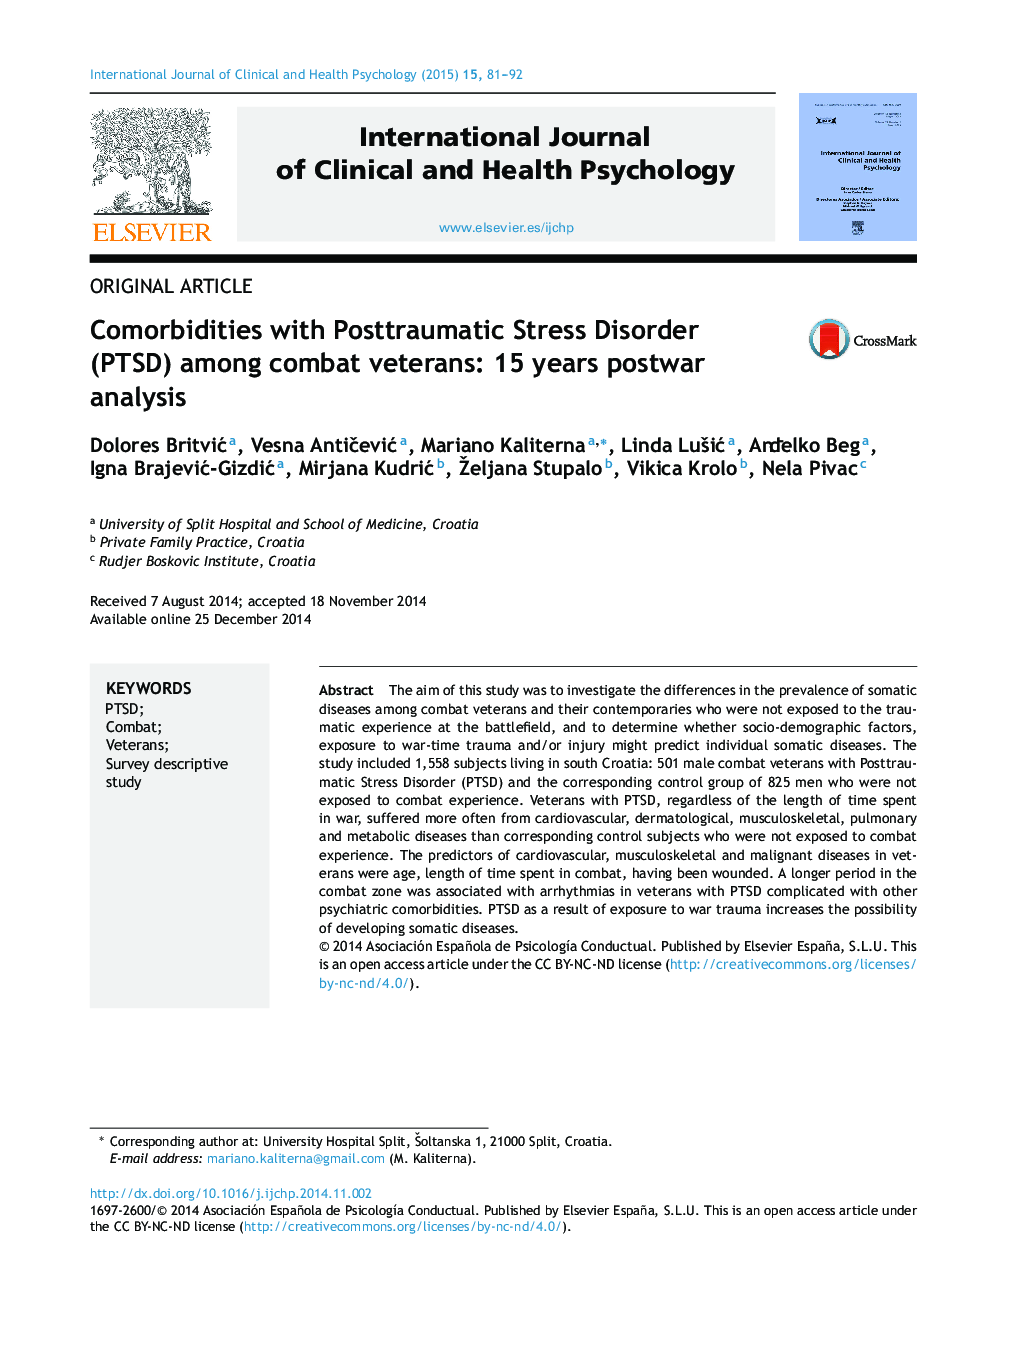 Comorbidities with Posttraumatic Stress Disorder (PTSD) among combat veterans: 15 years postwar analysis 